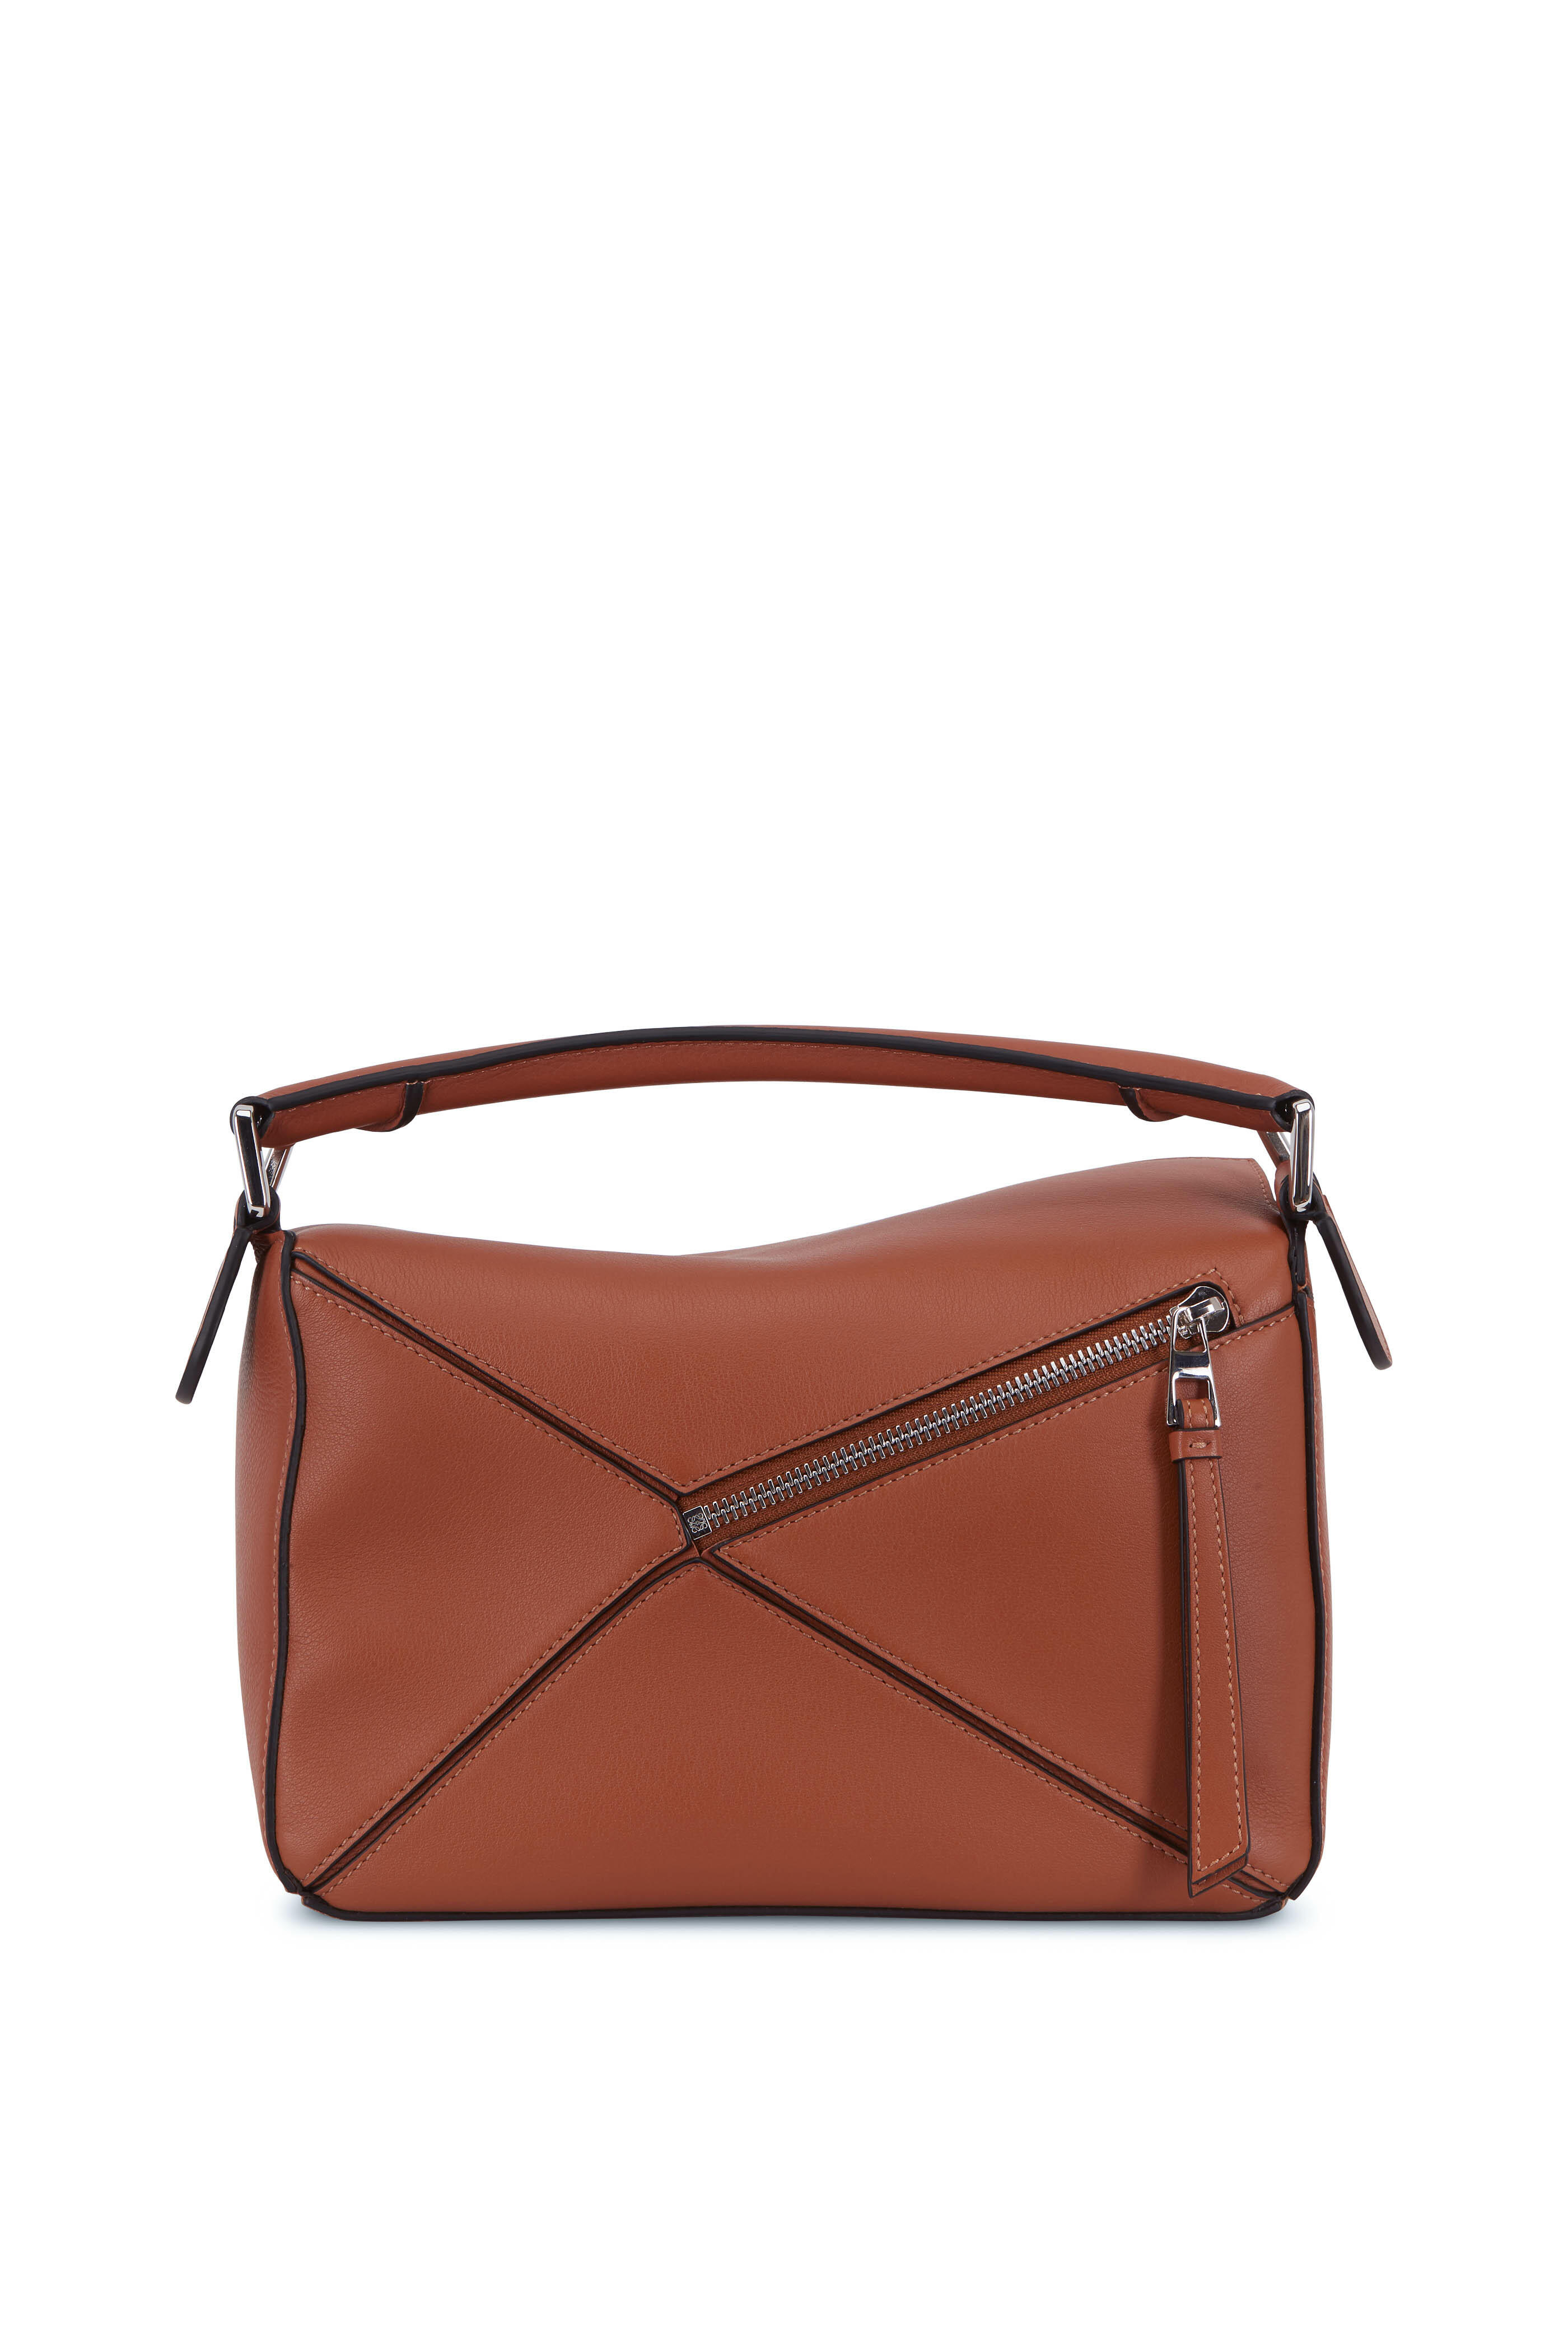 Loewe Goya Small Leather Shoulder Bag - Women - Tan Cross-body Bags